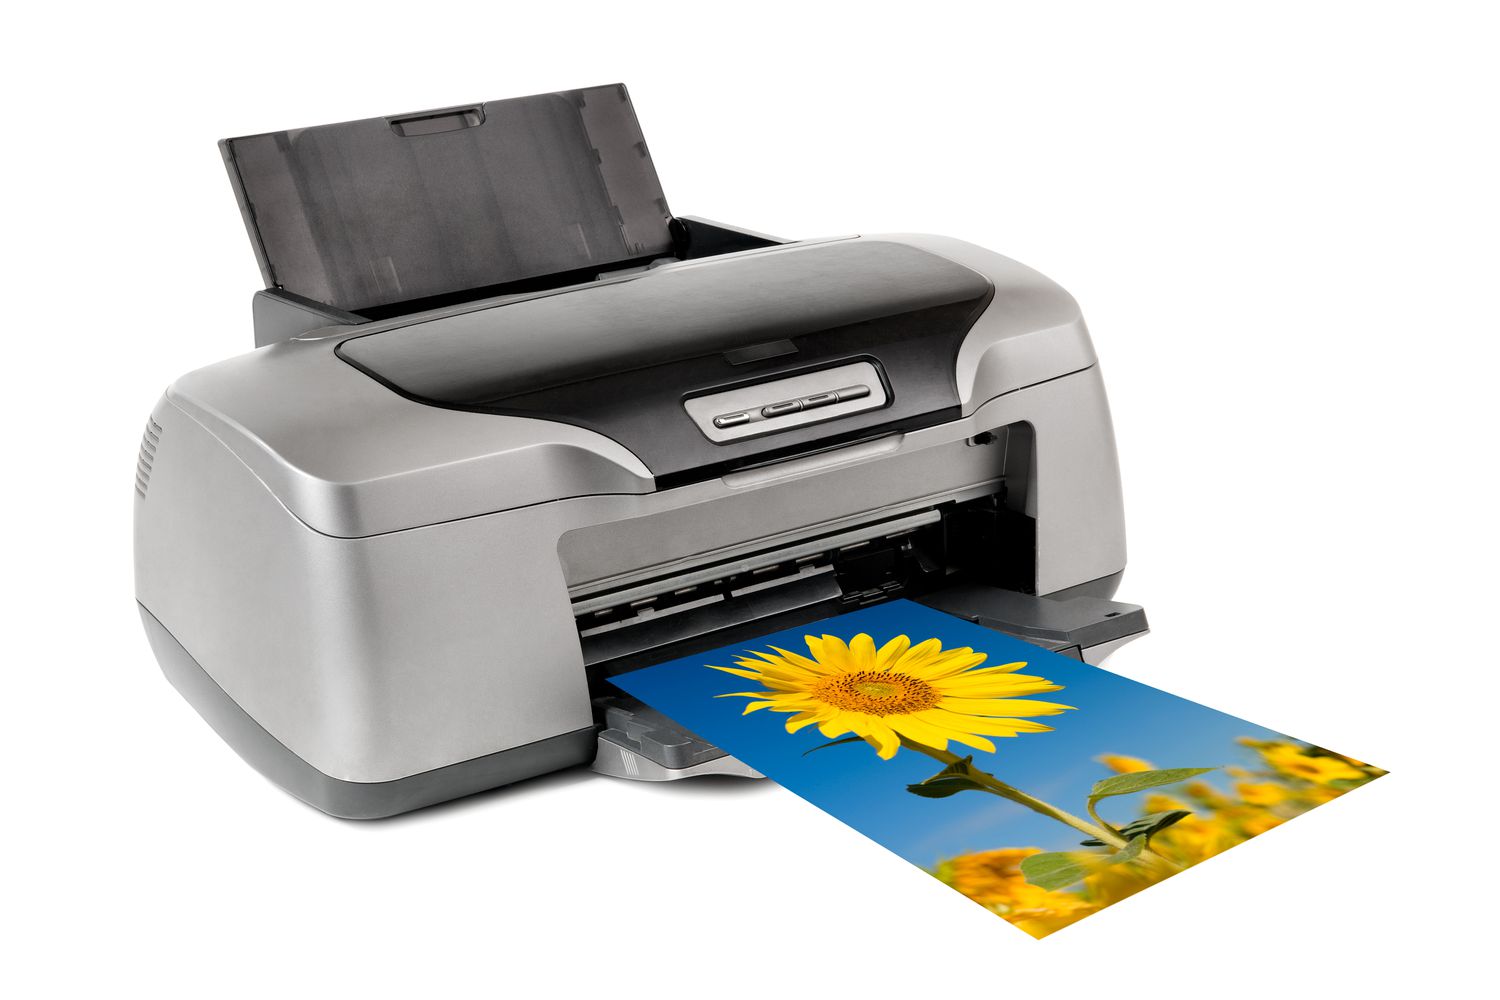 Can we print photos in inkjet printer?